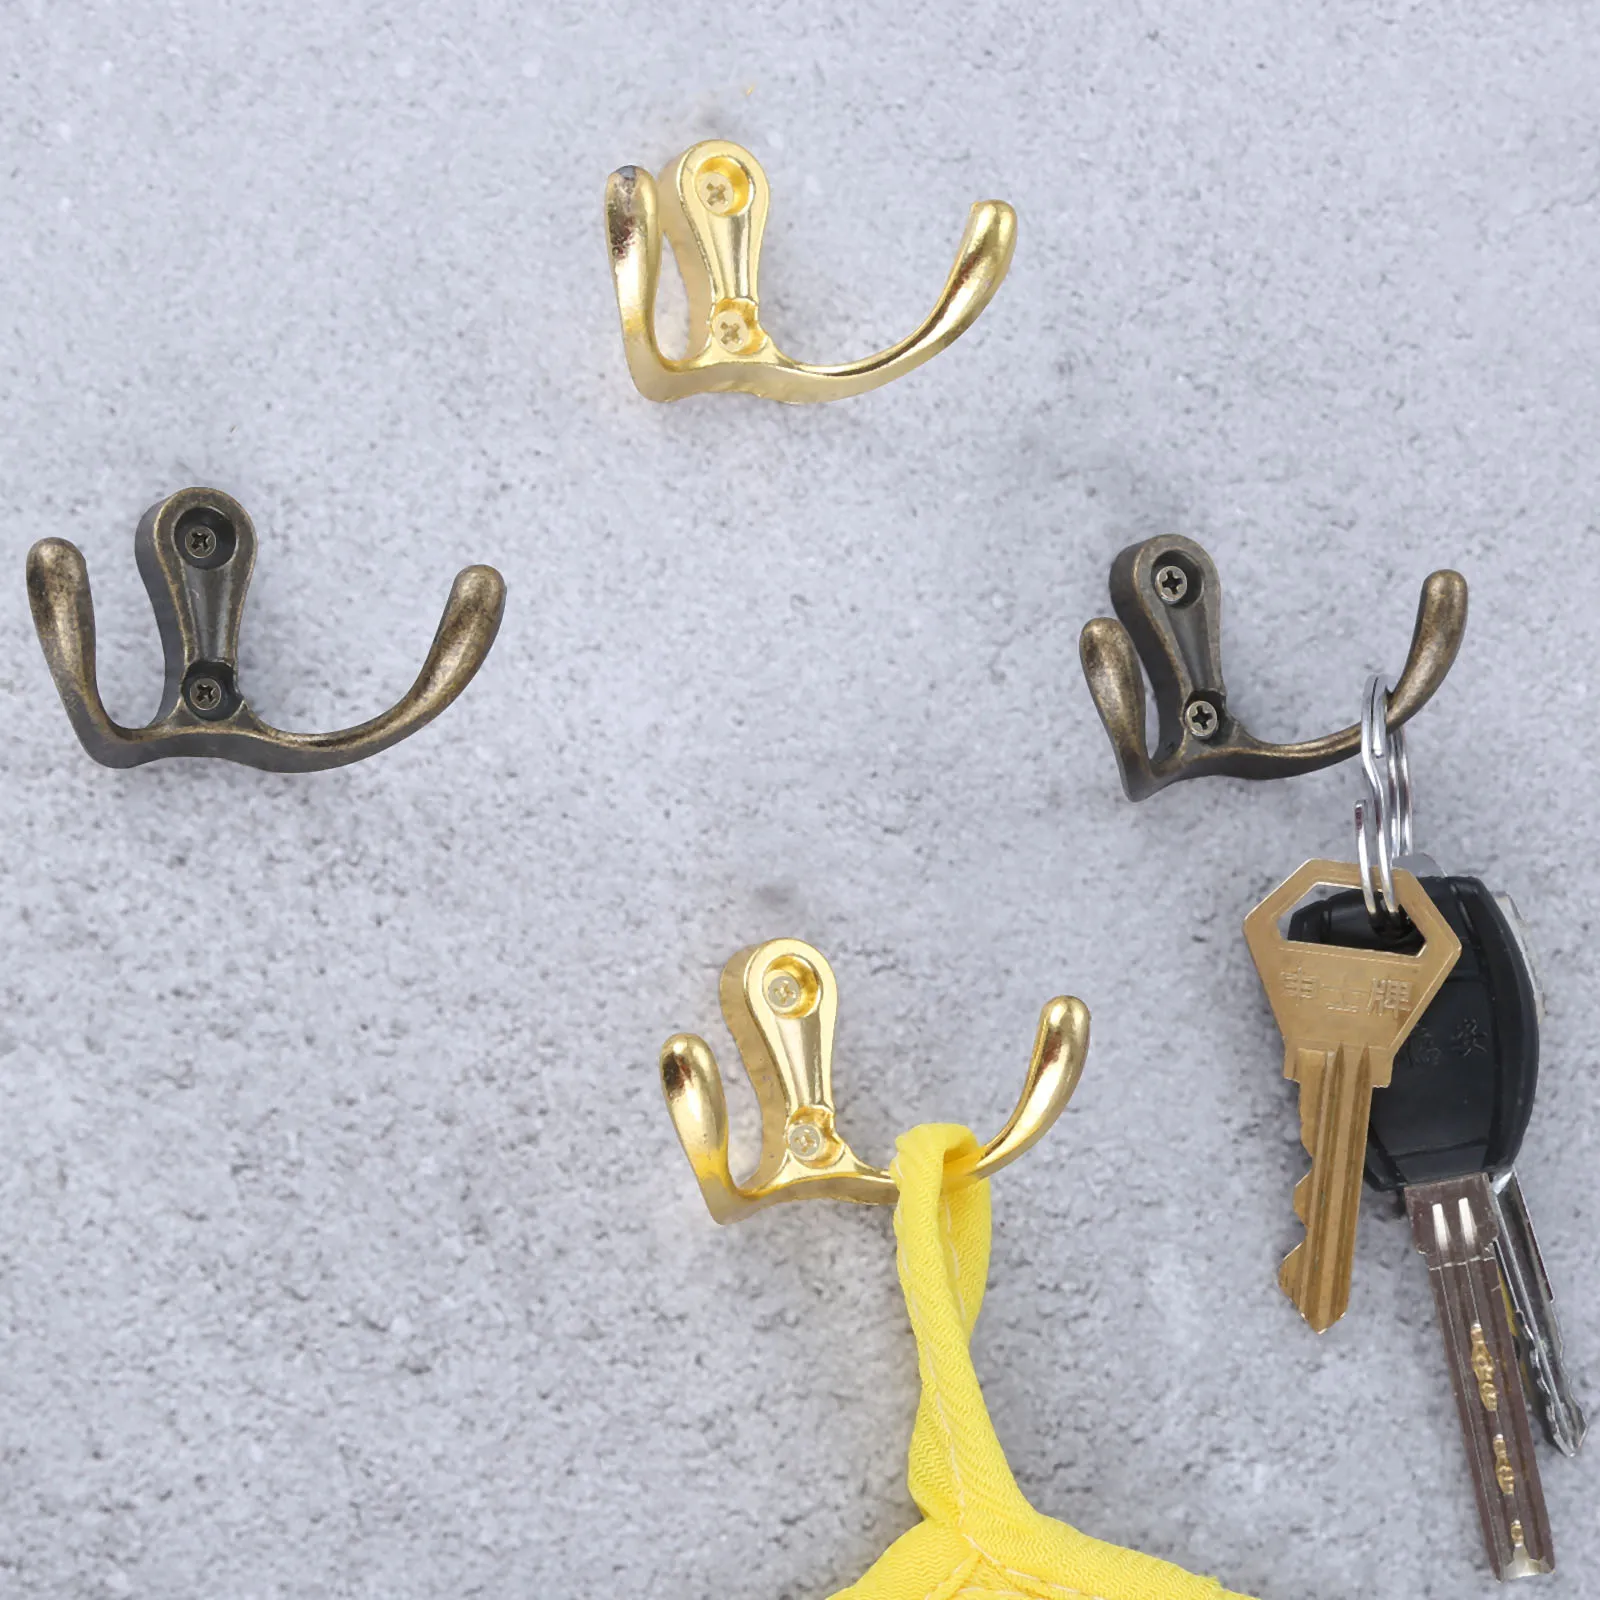 2pcs Double Head Hooks Wall Mounted Hanger w/screws Antique bronze/Gold Coat/Key/Bag/Towel/Hat Holder Bathroom Kitchen 53mmx30mm